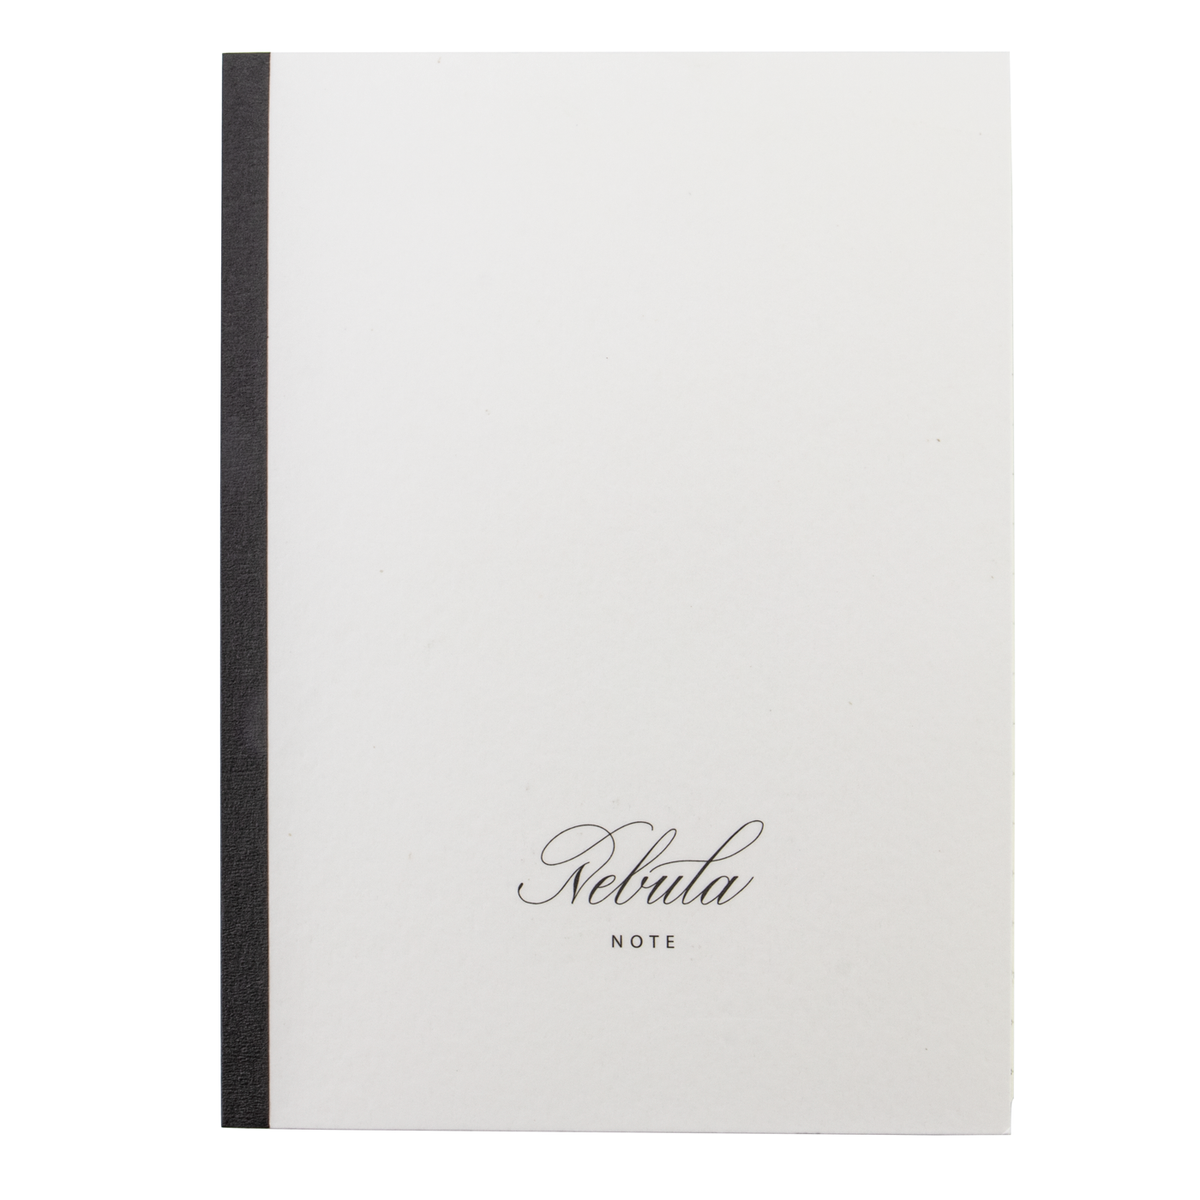 Colorverse Nebula Note A6 Notebook- Tomoe River 52g Cream, Blank